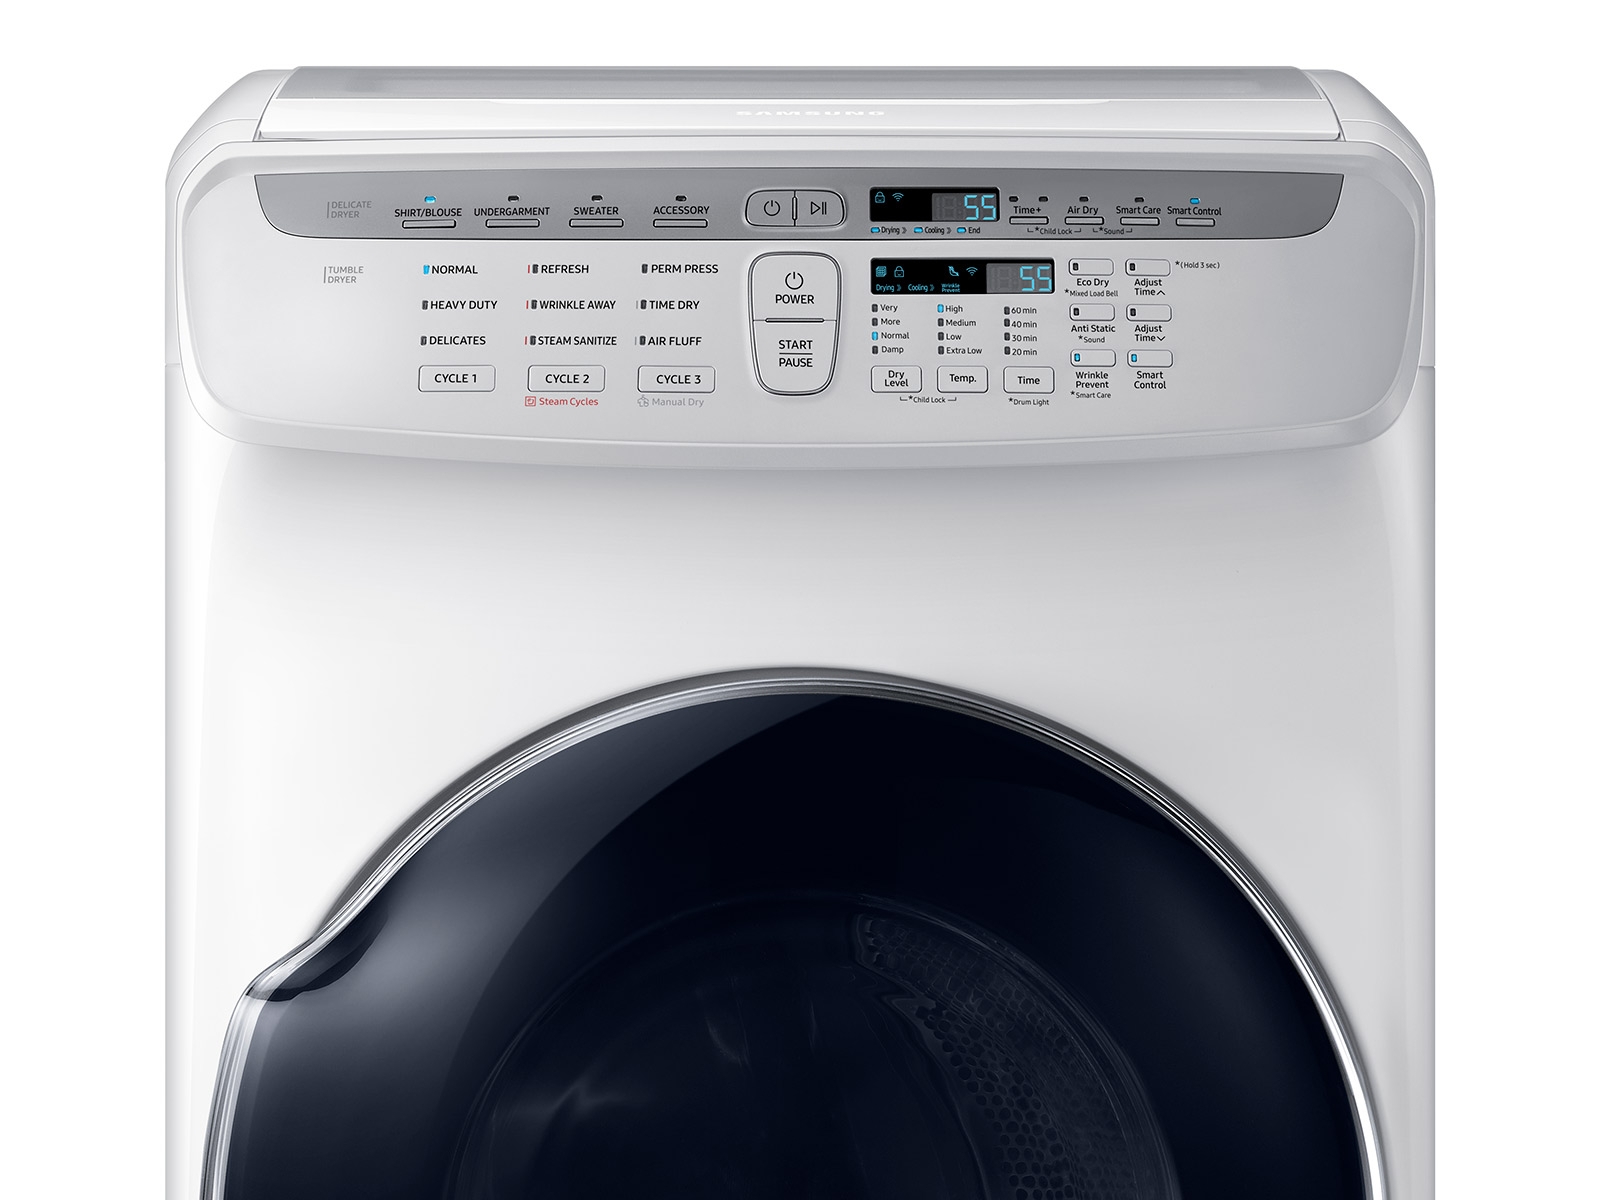 Samsung DVE55M9600W 7.5 Cu ft FlexDry Electric Dryer - White